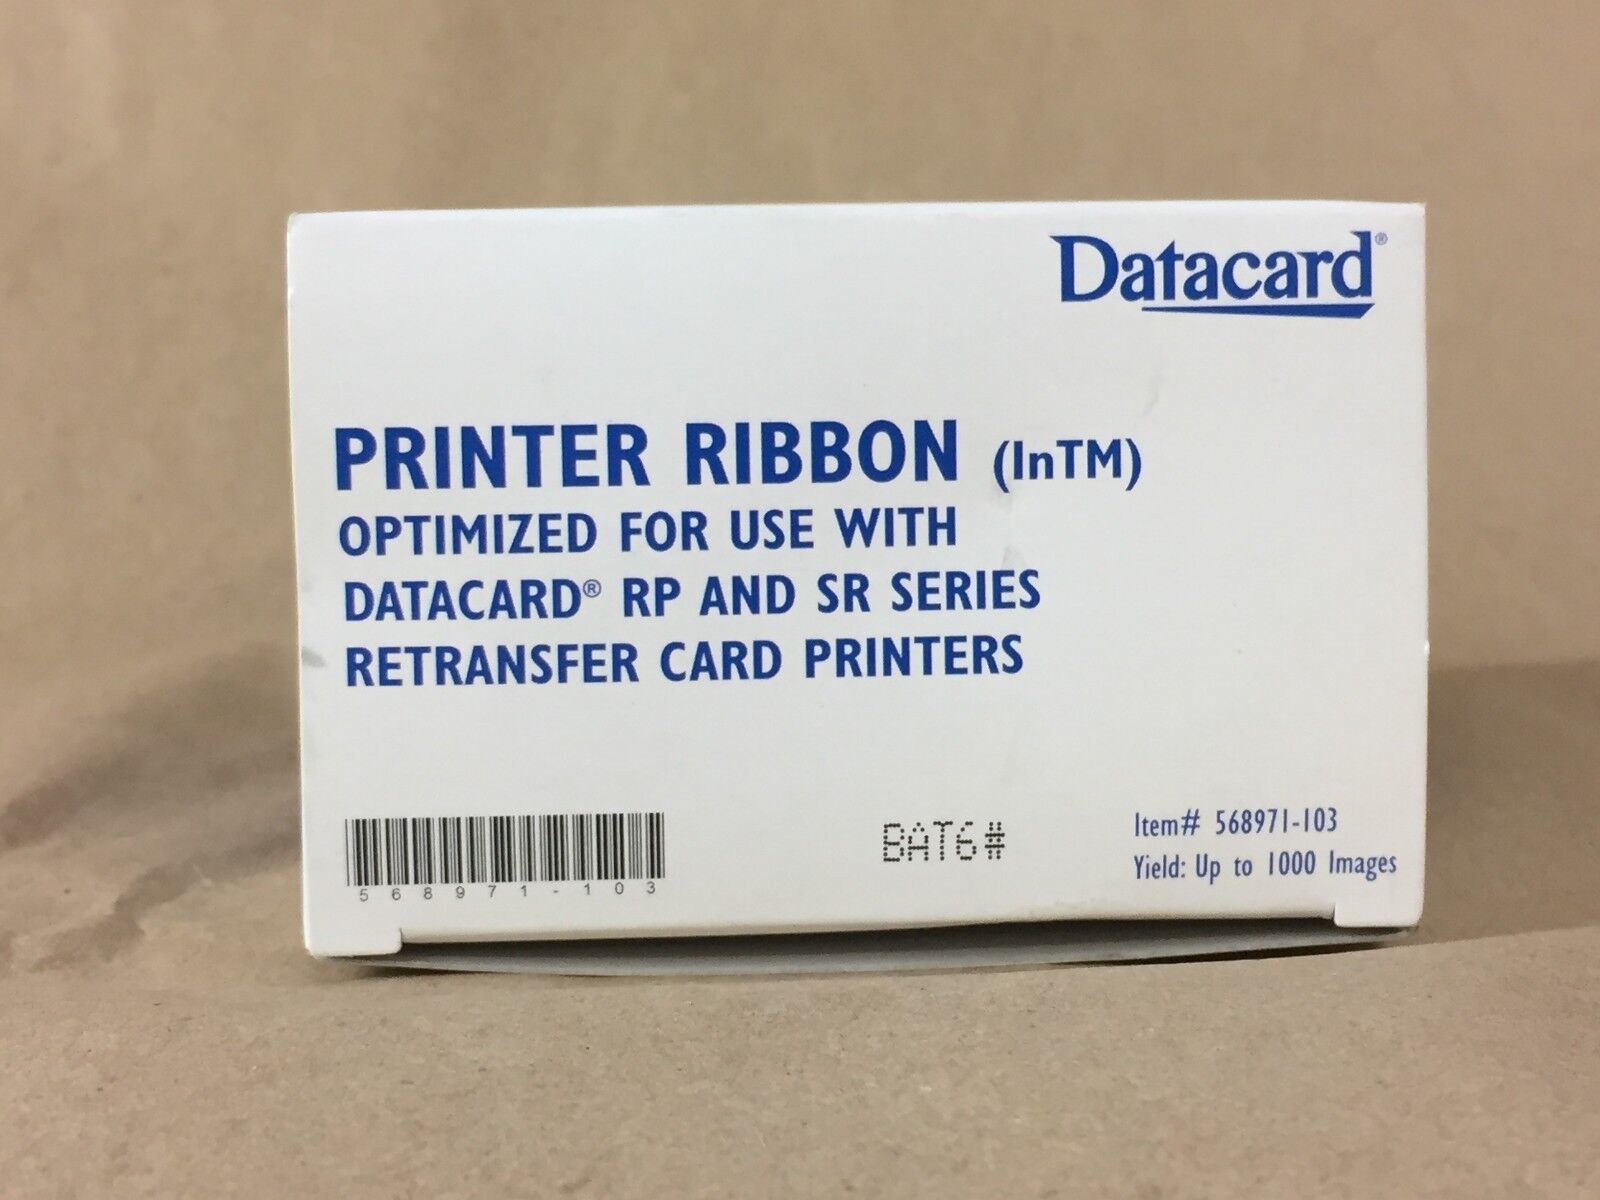 Brand New Datacard Printer Ribbon Item #568971-103, 1000 Images